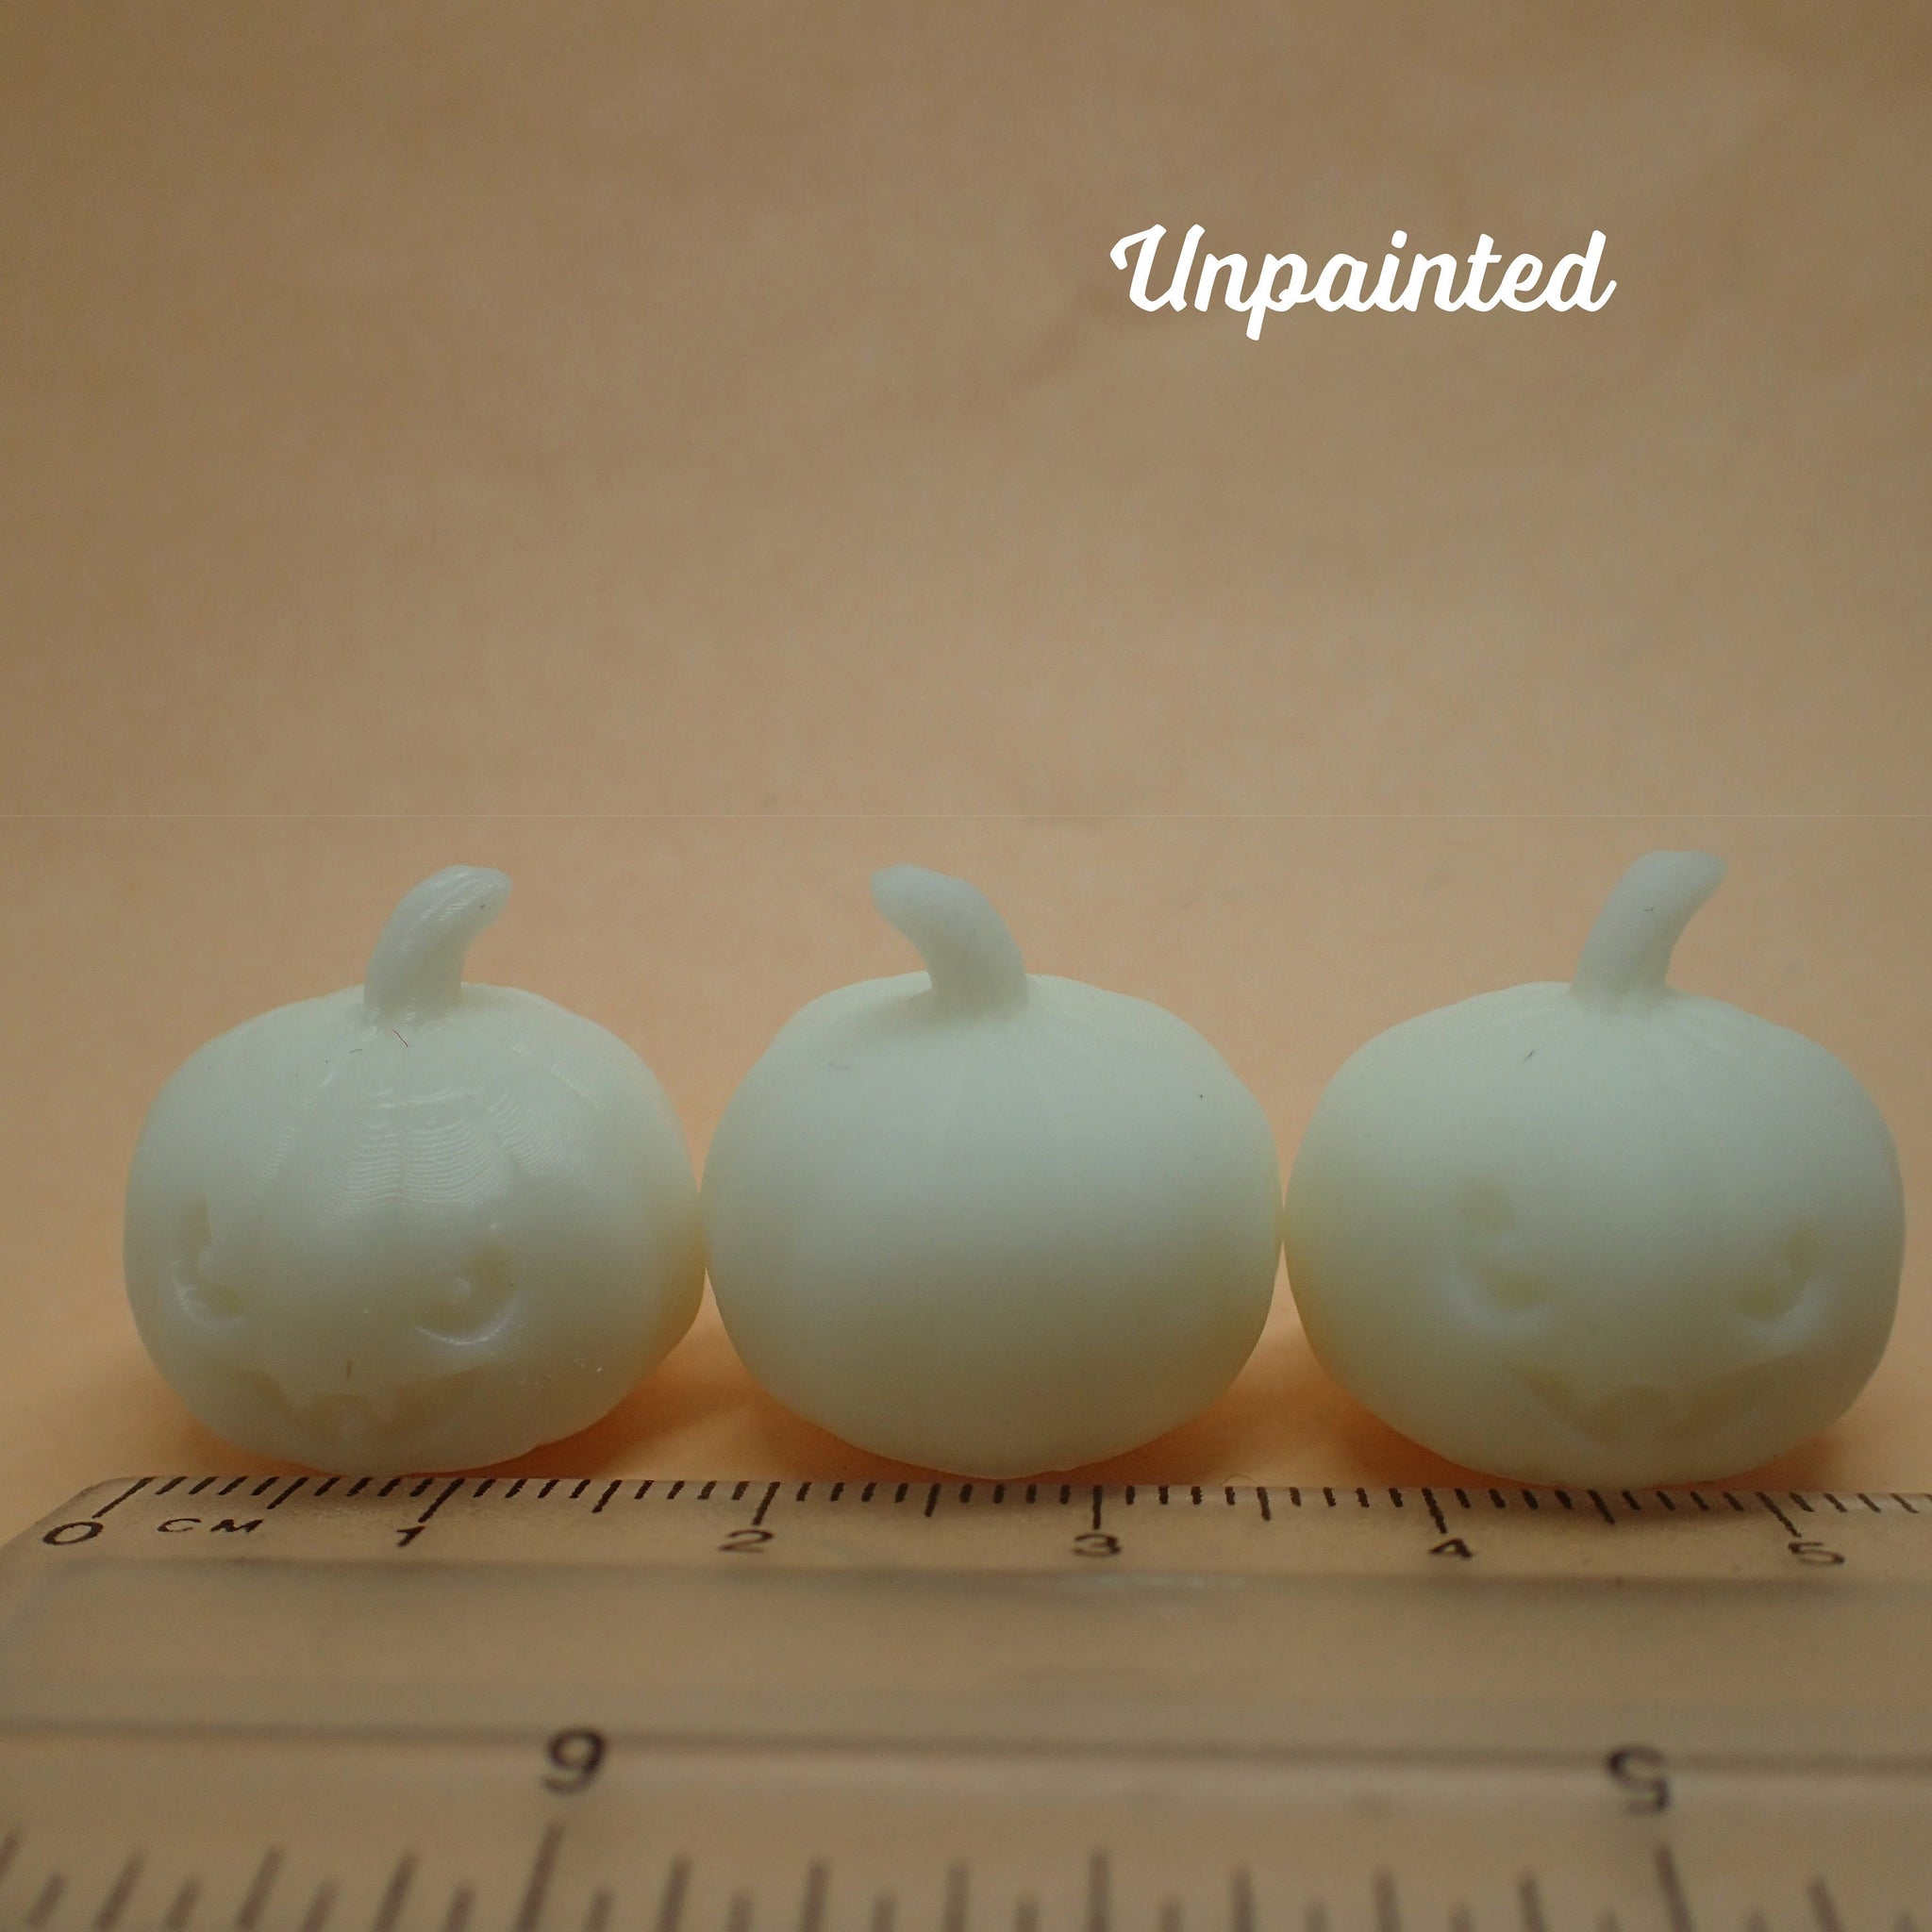 Spooky tiny Halloween pumpkins! 1/24th scale